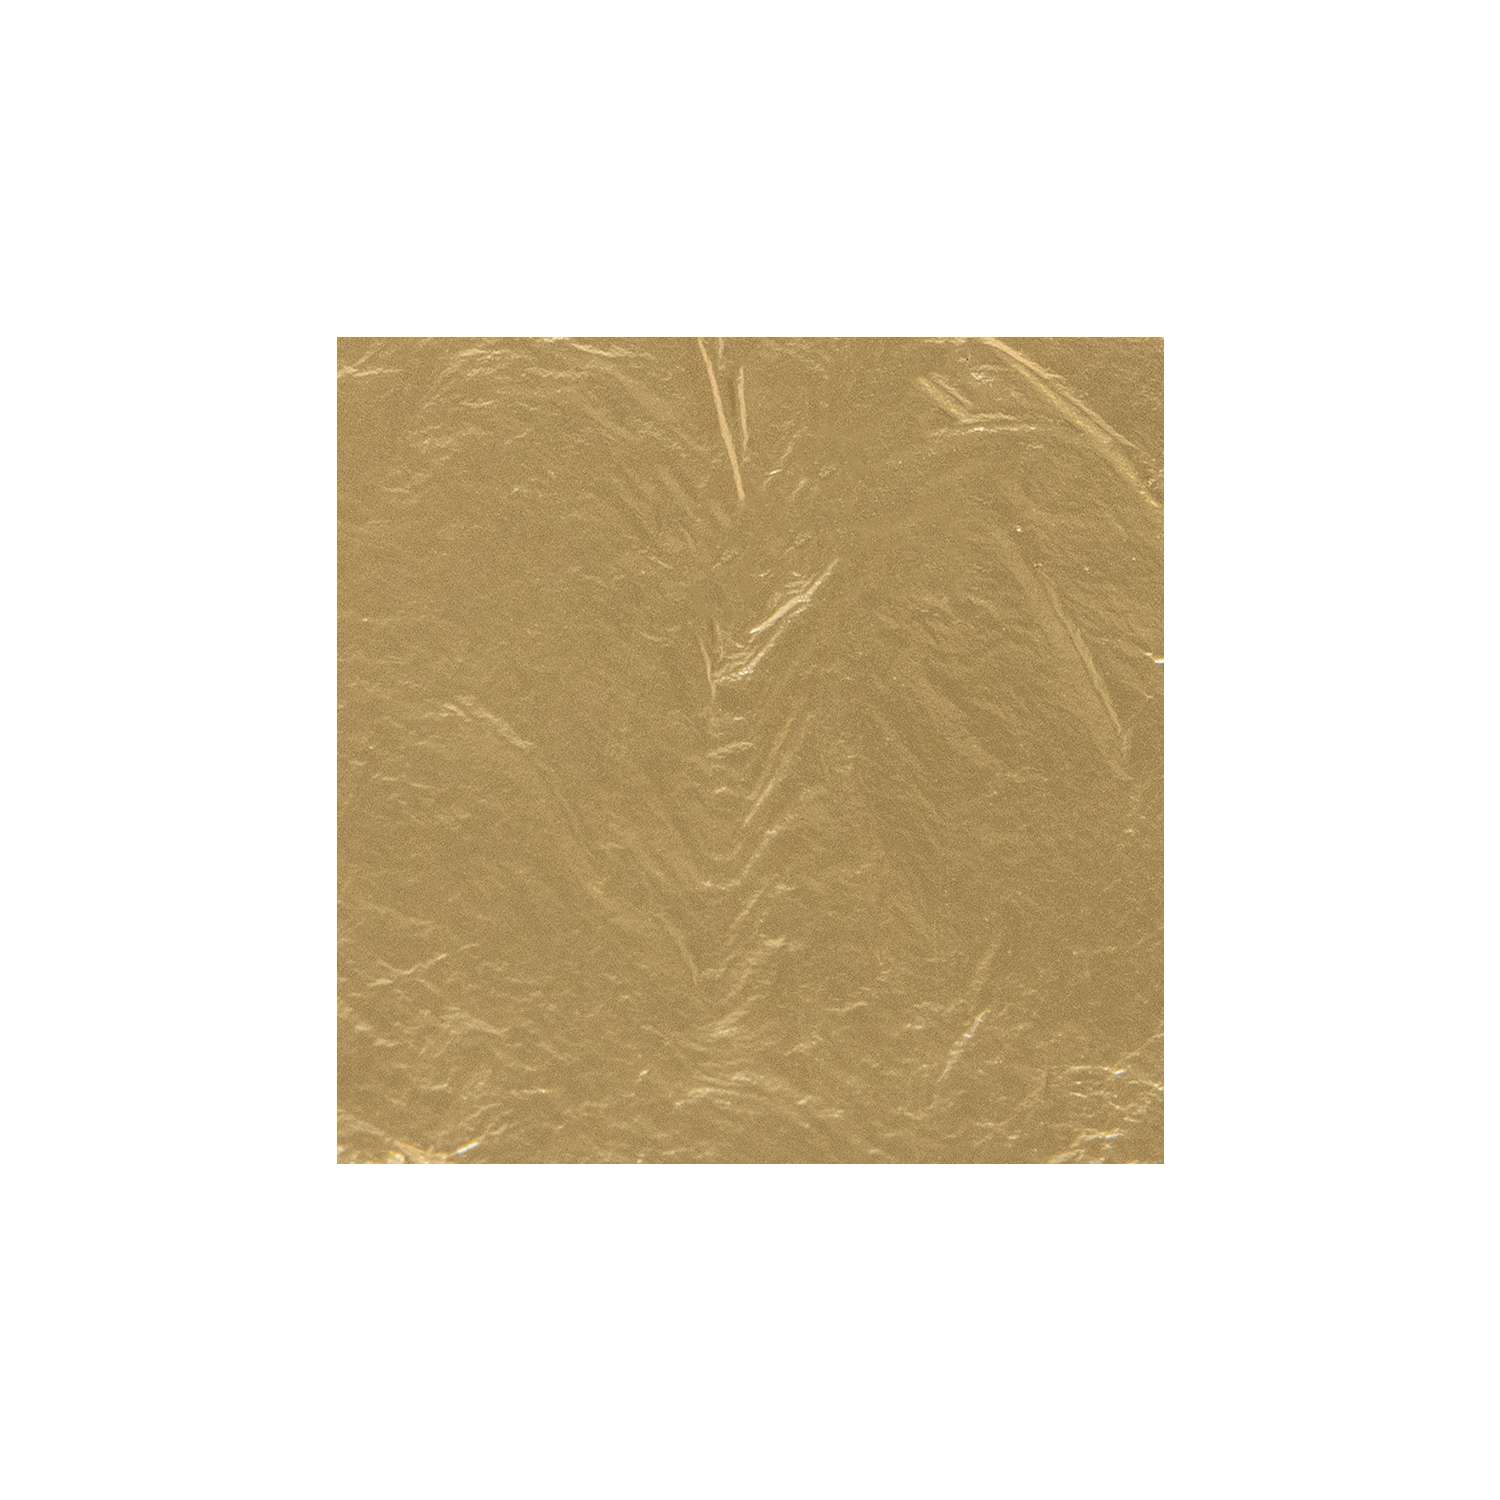 Blattgold Vergoldung Kit Enthält 25 Blatt Italienisches Blattgold